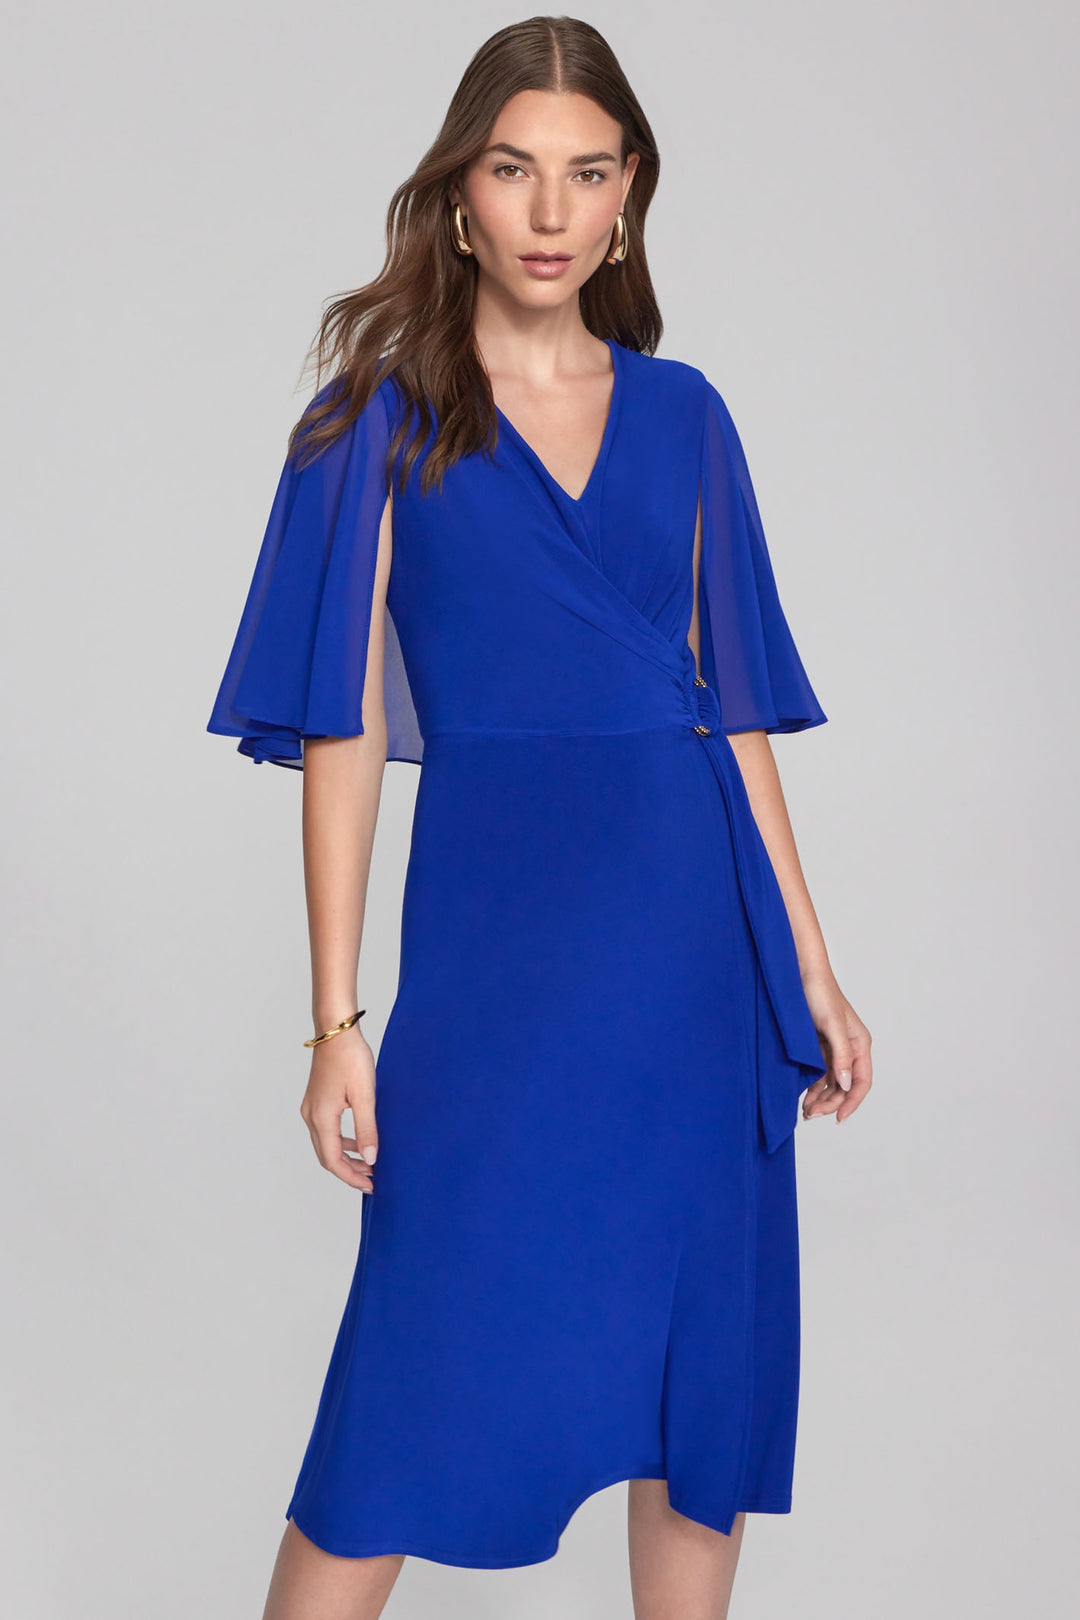 Joseph Ribkoff 231757 Royal Sapphire Blue Wrap Style Occasion Dress - Dotique Chesterfield